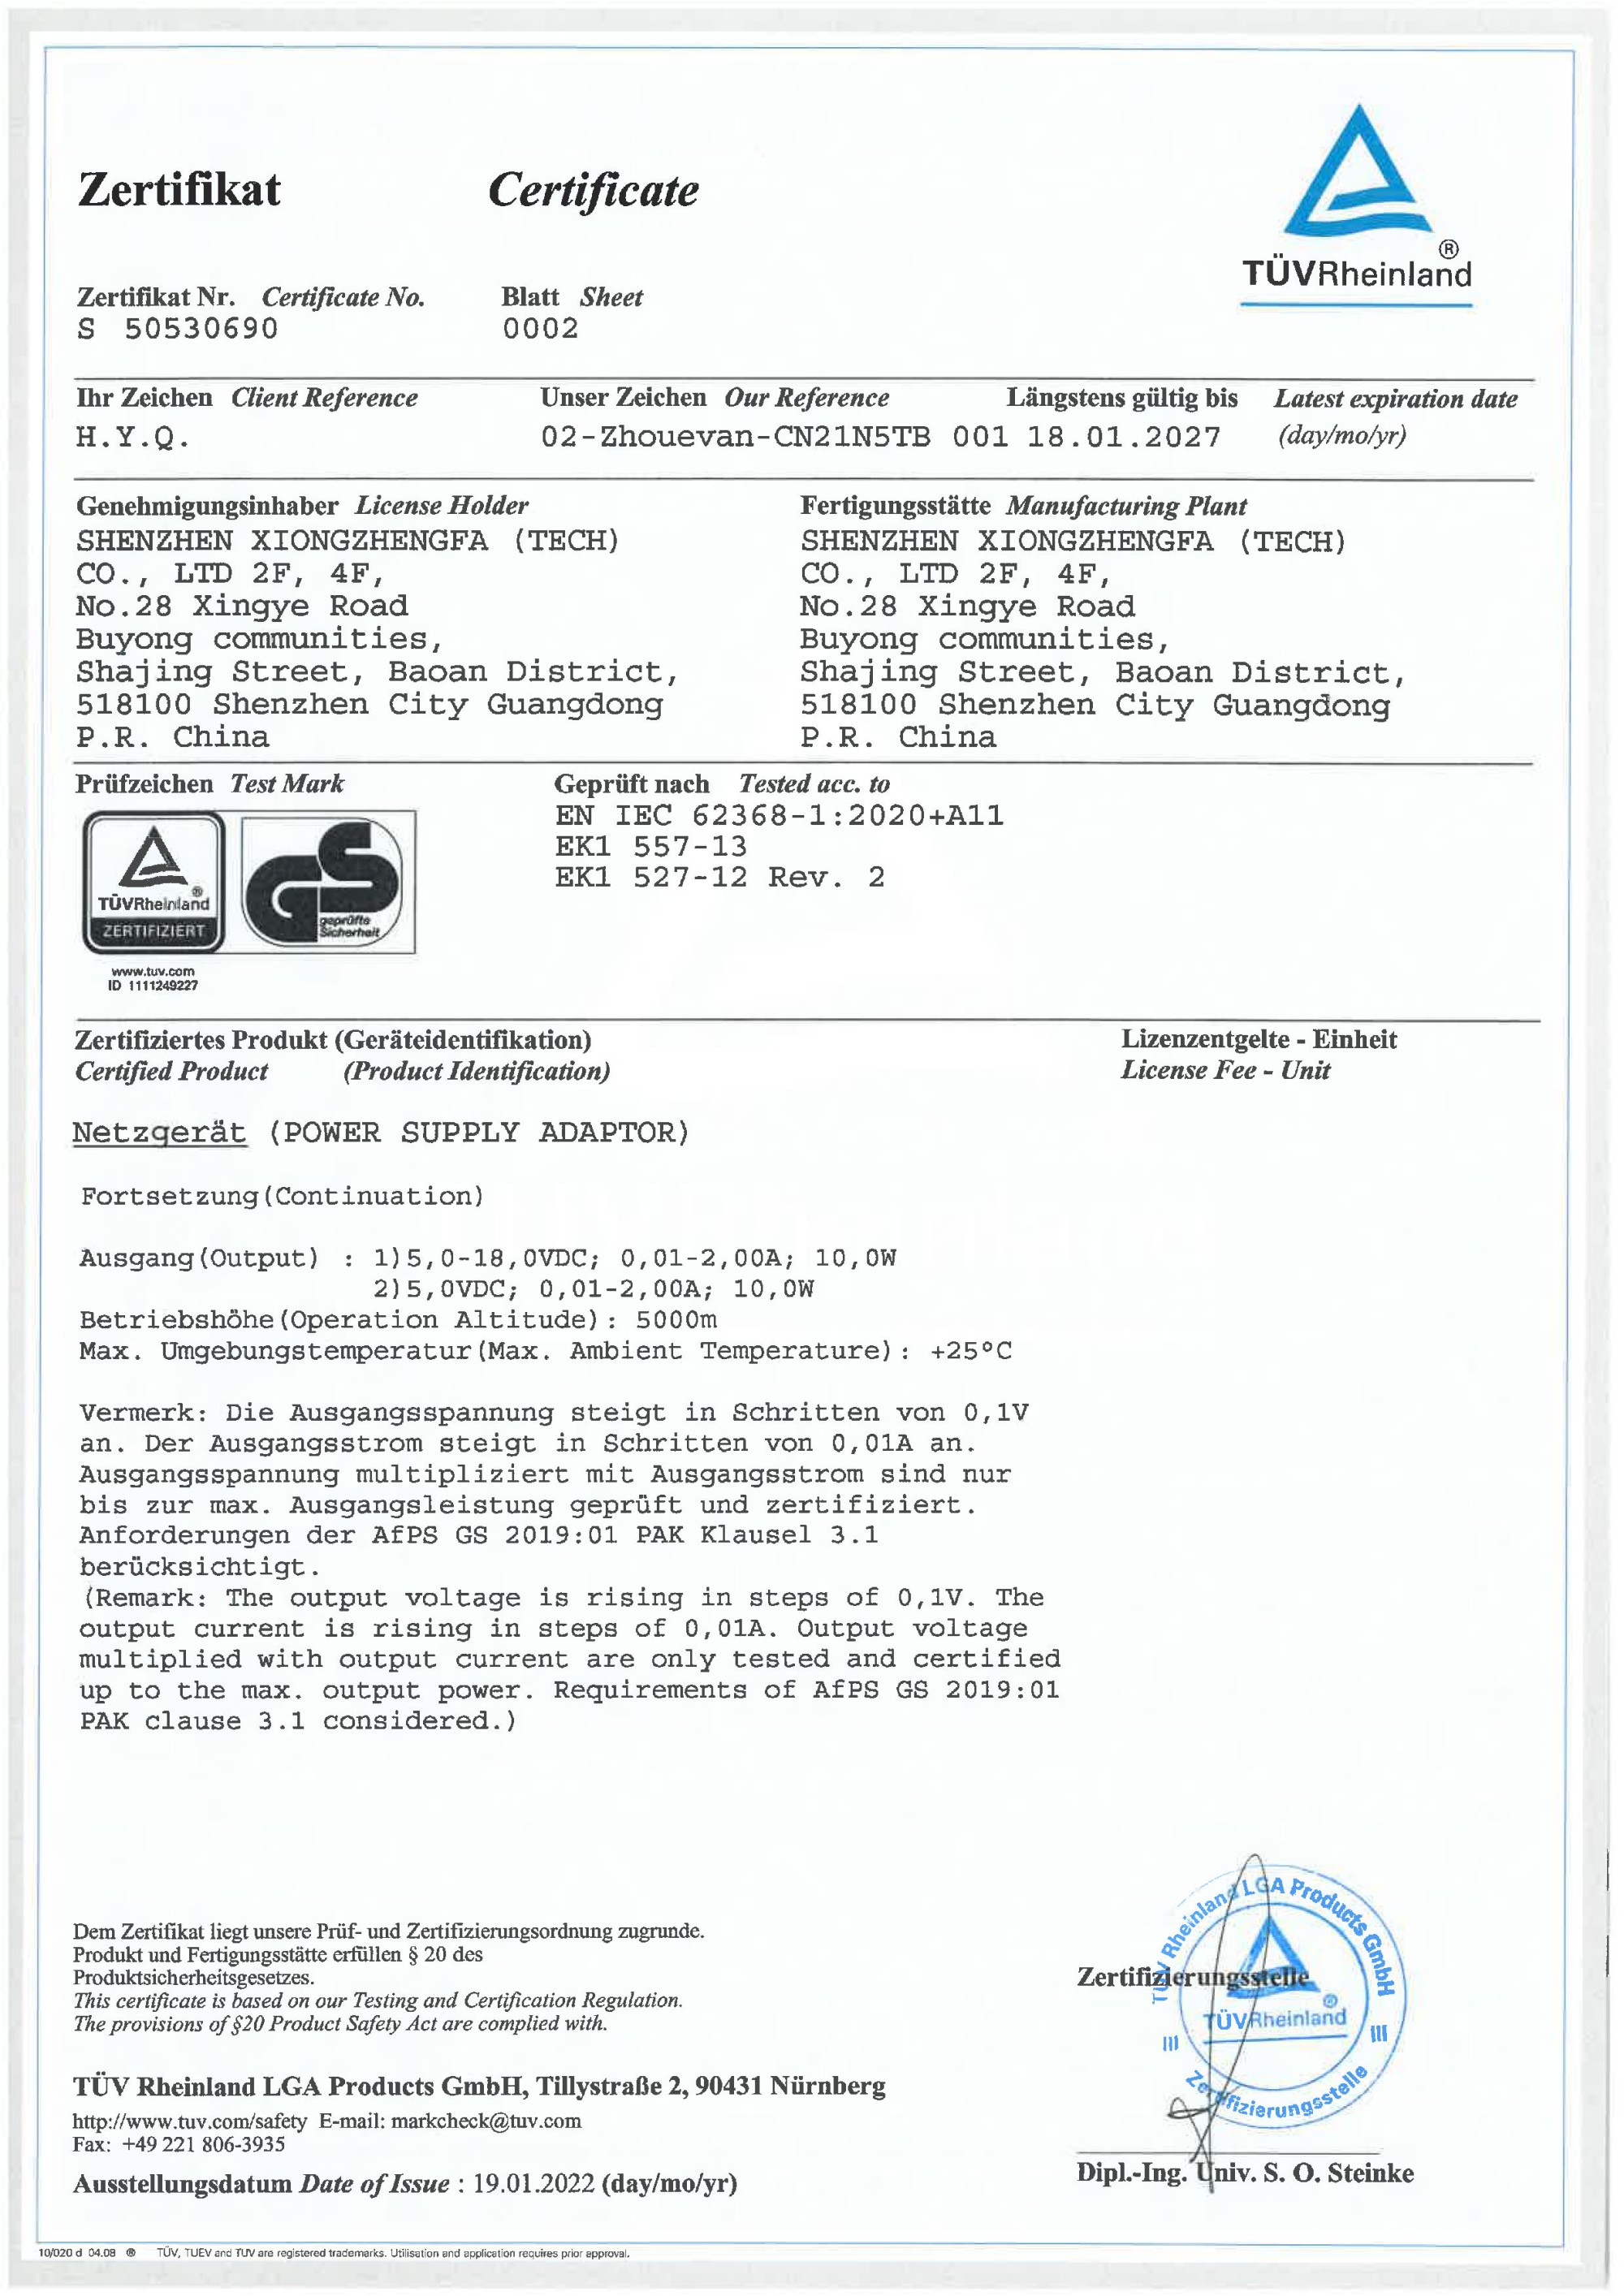 GS(TUV) certification